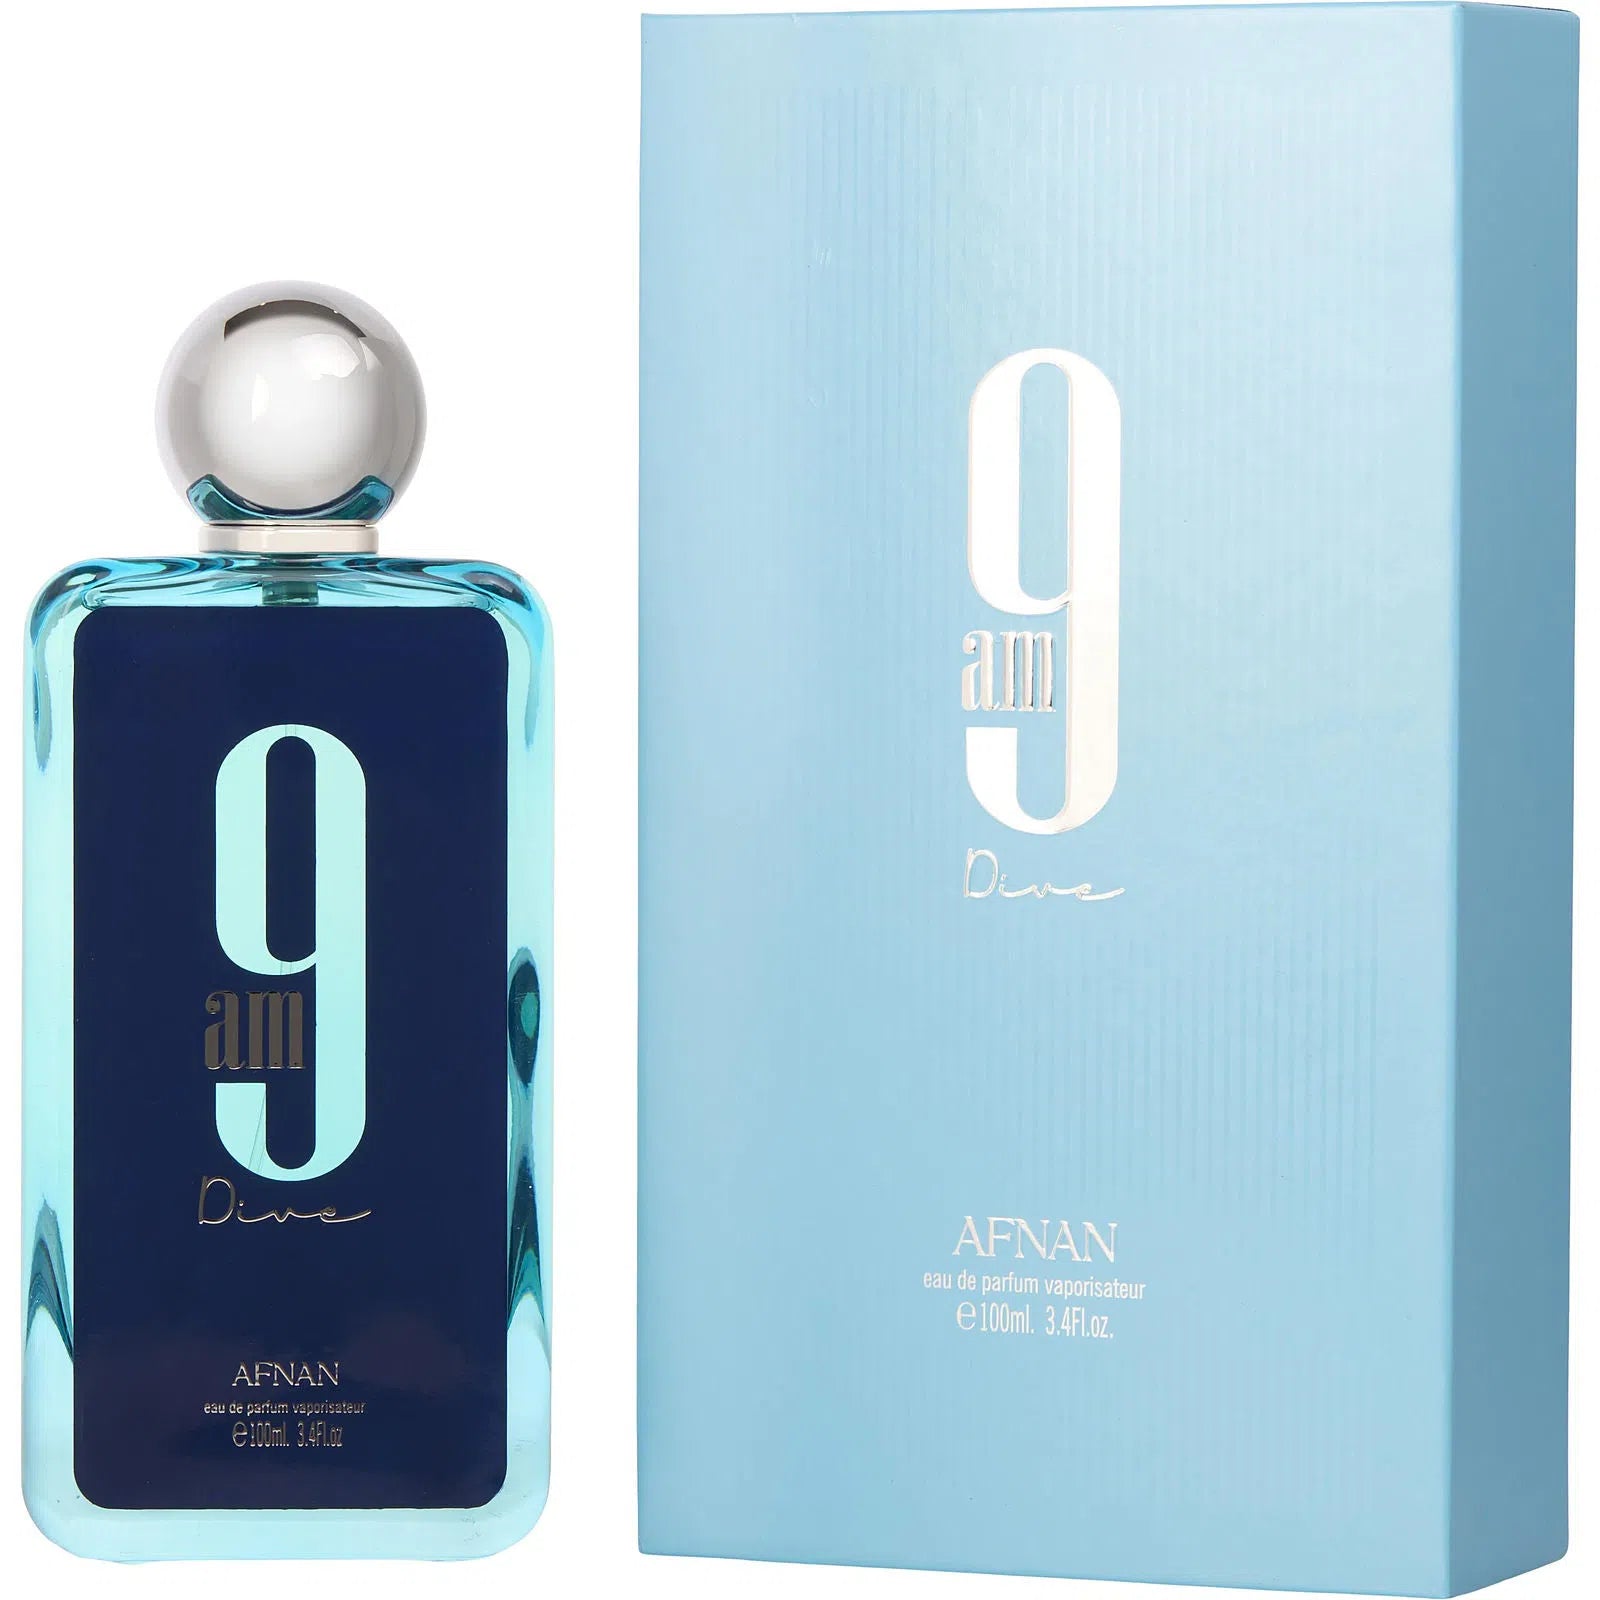 Perfume Afnan 9AM Dive EDP (U) / 100 ml - 6290171072836- Prive Perfumes Honduras